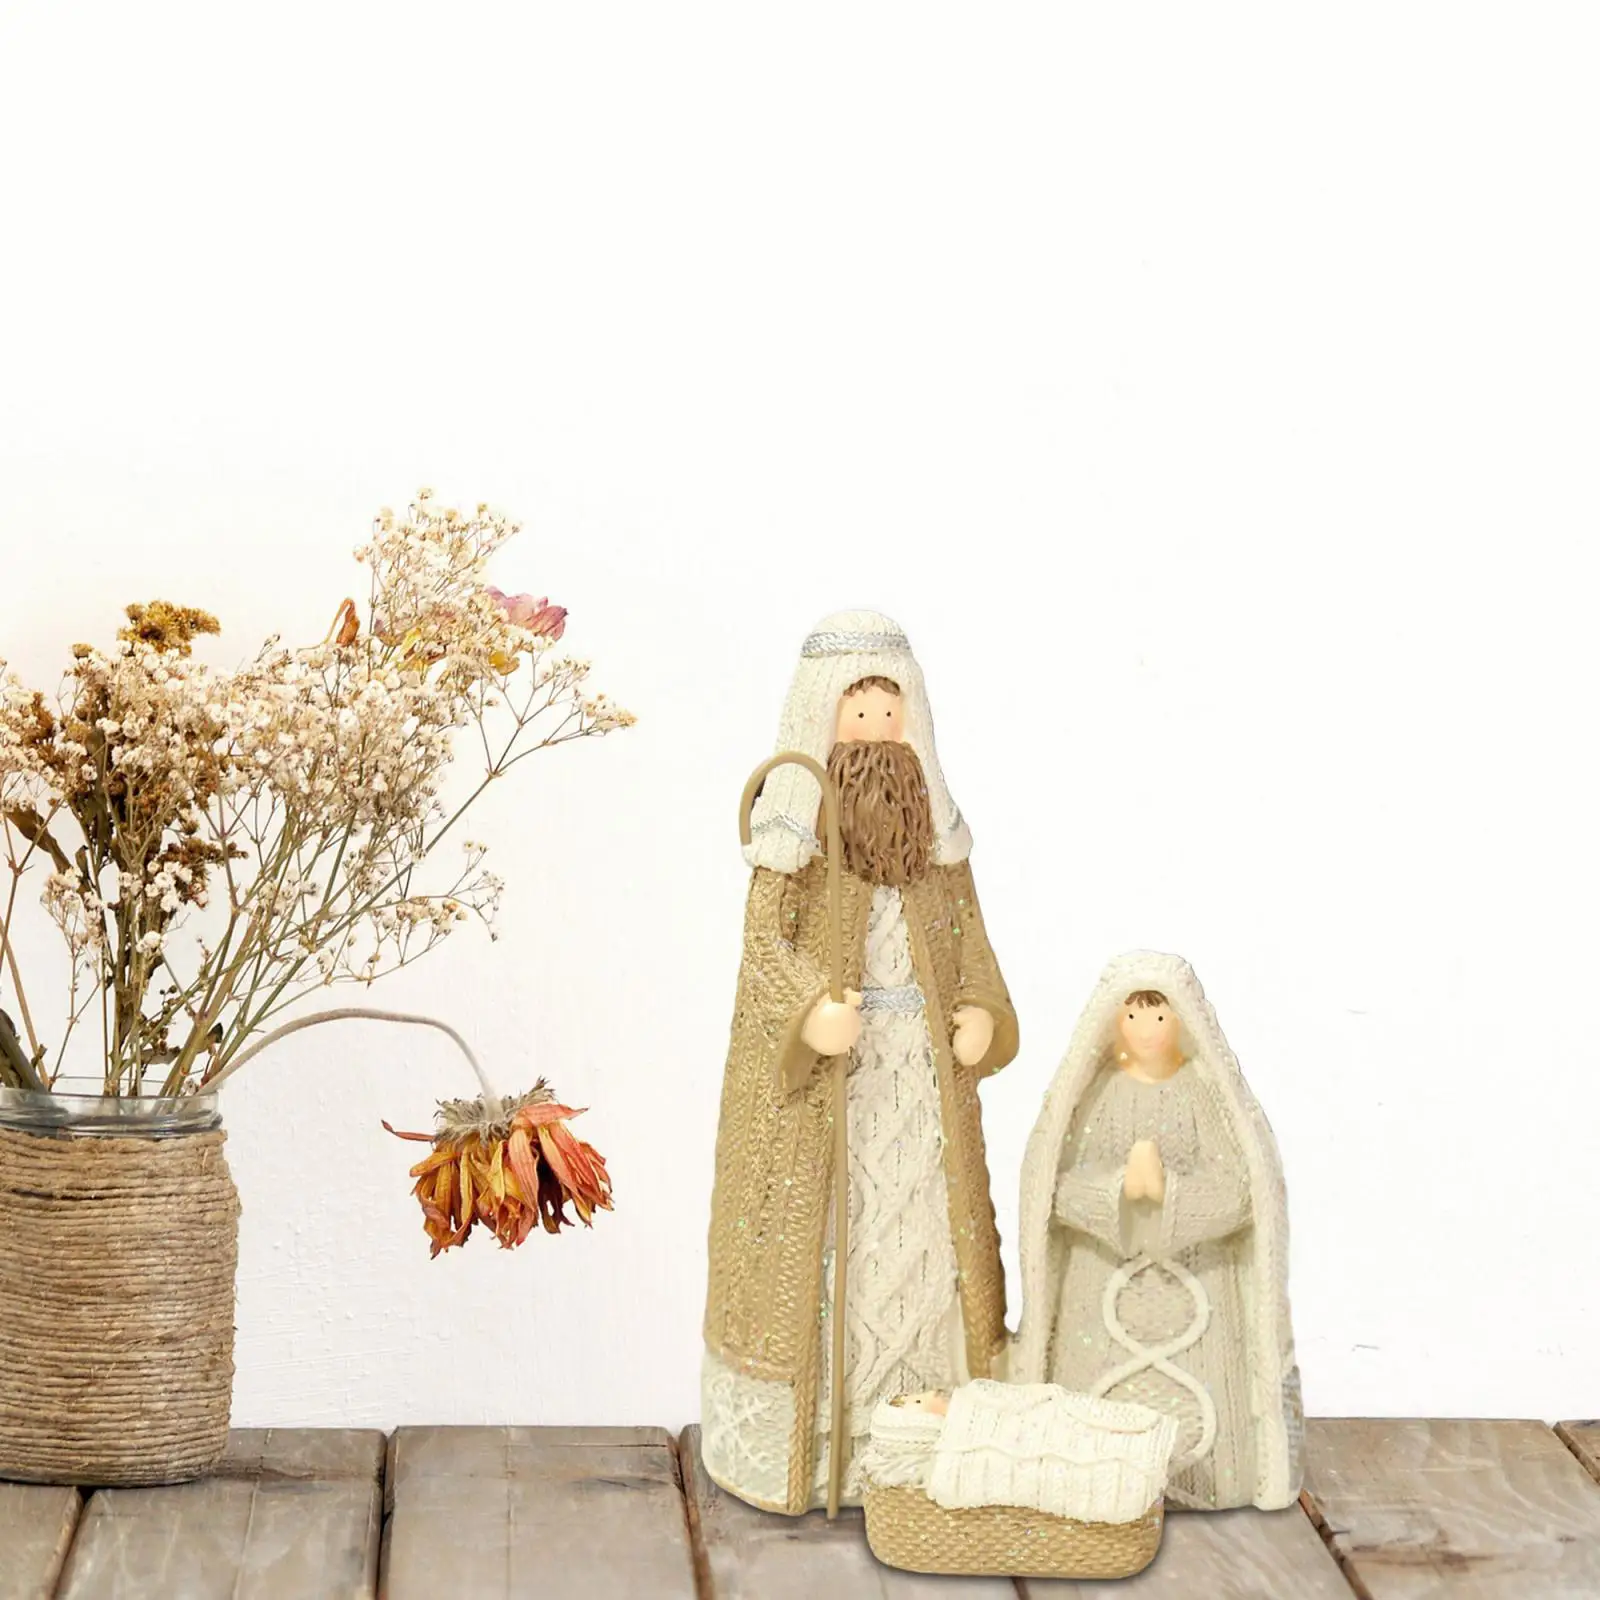 Holy Family Figurine Nativity Scene Crafts Decorative for Fireplace Church Desktop Decor